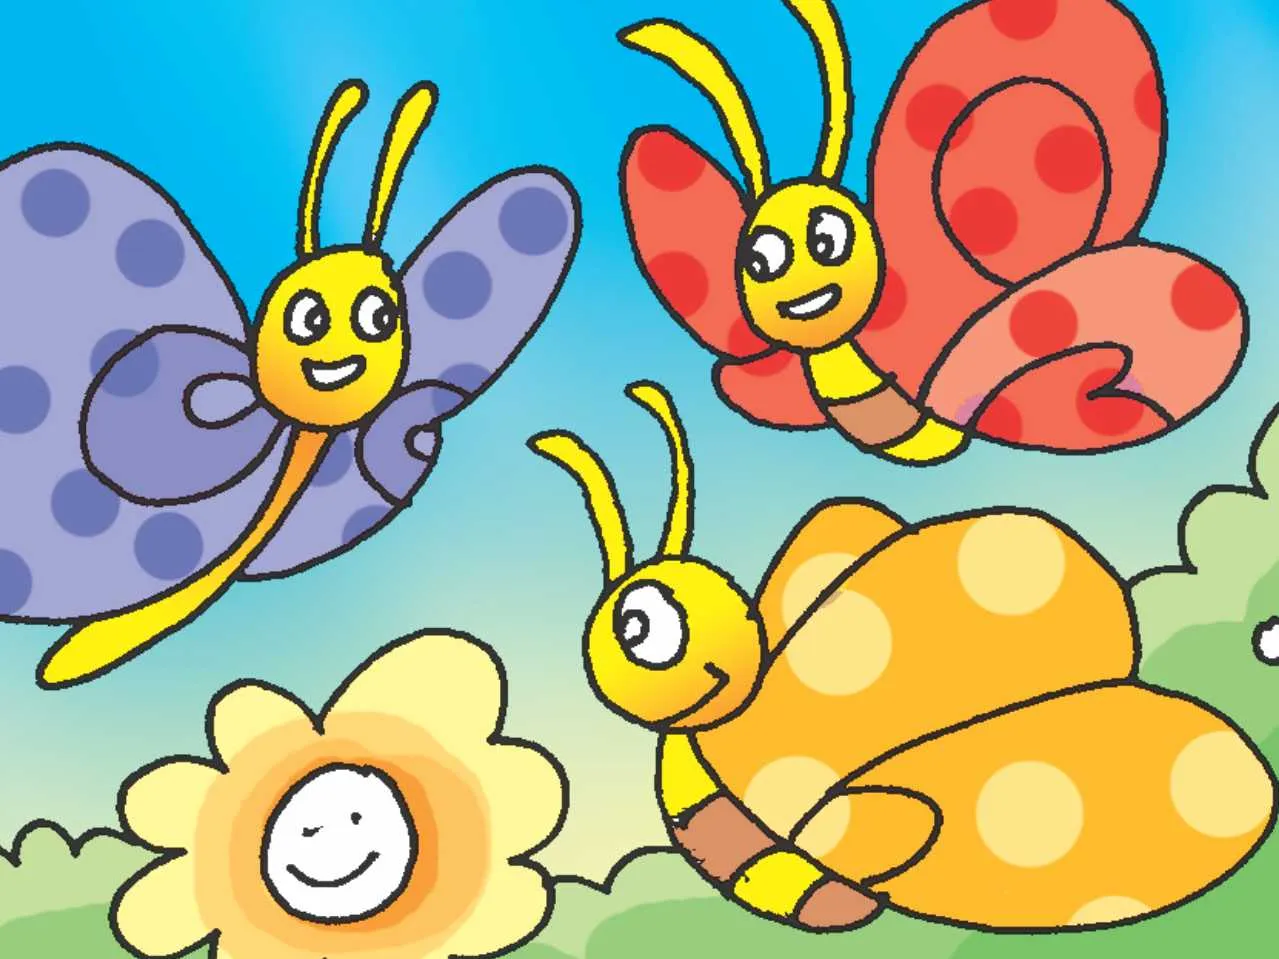 Three Butterflies cartoon image